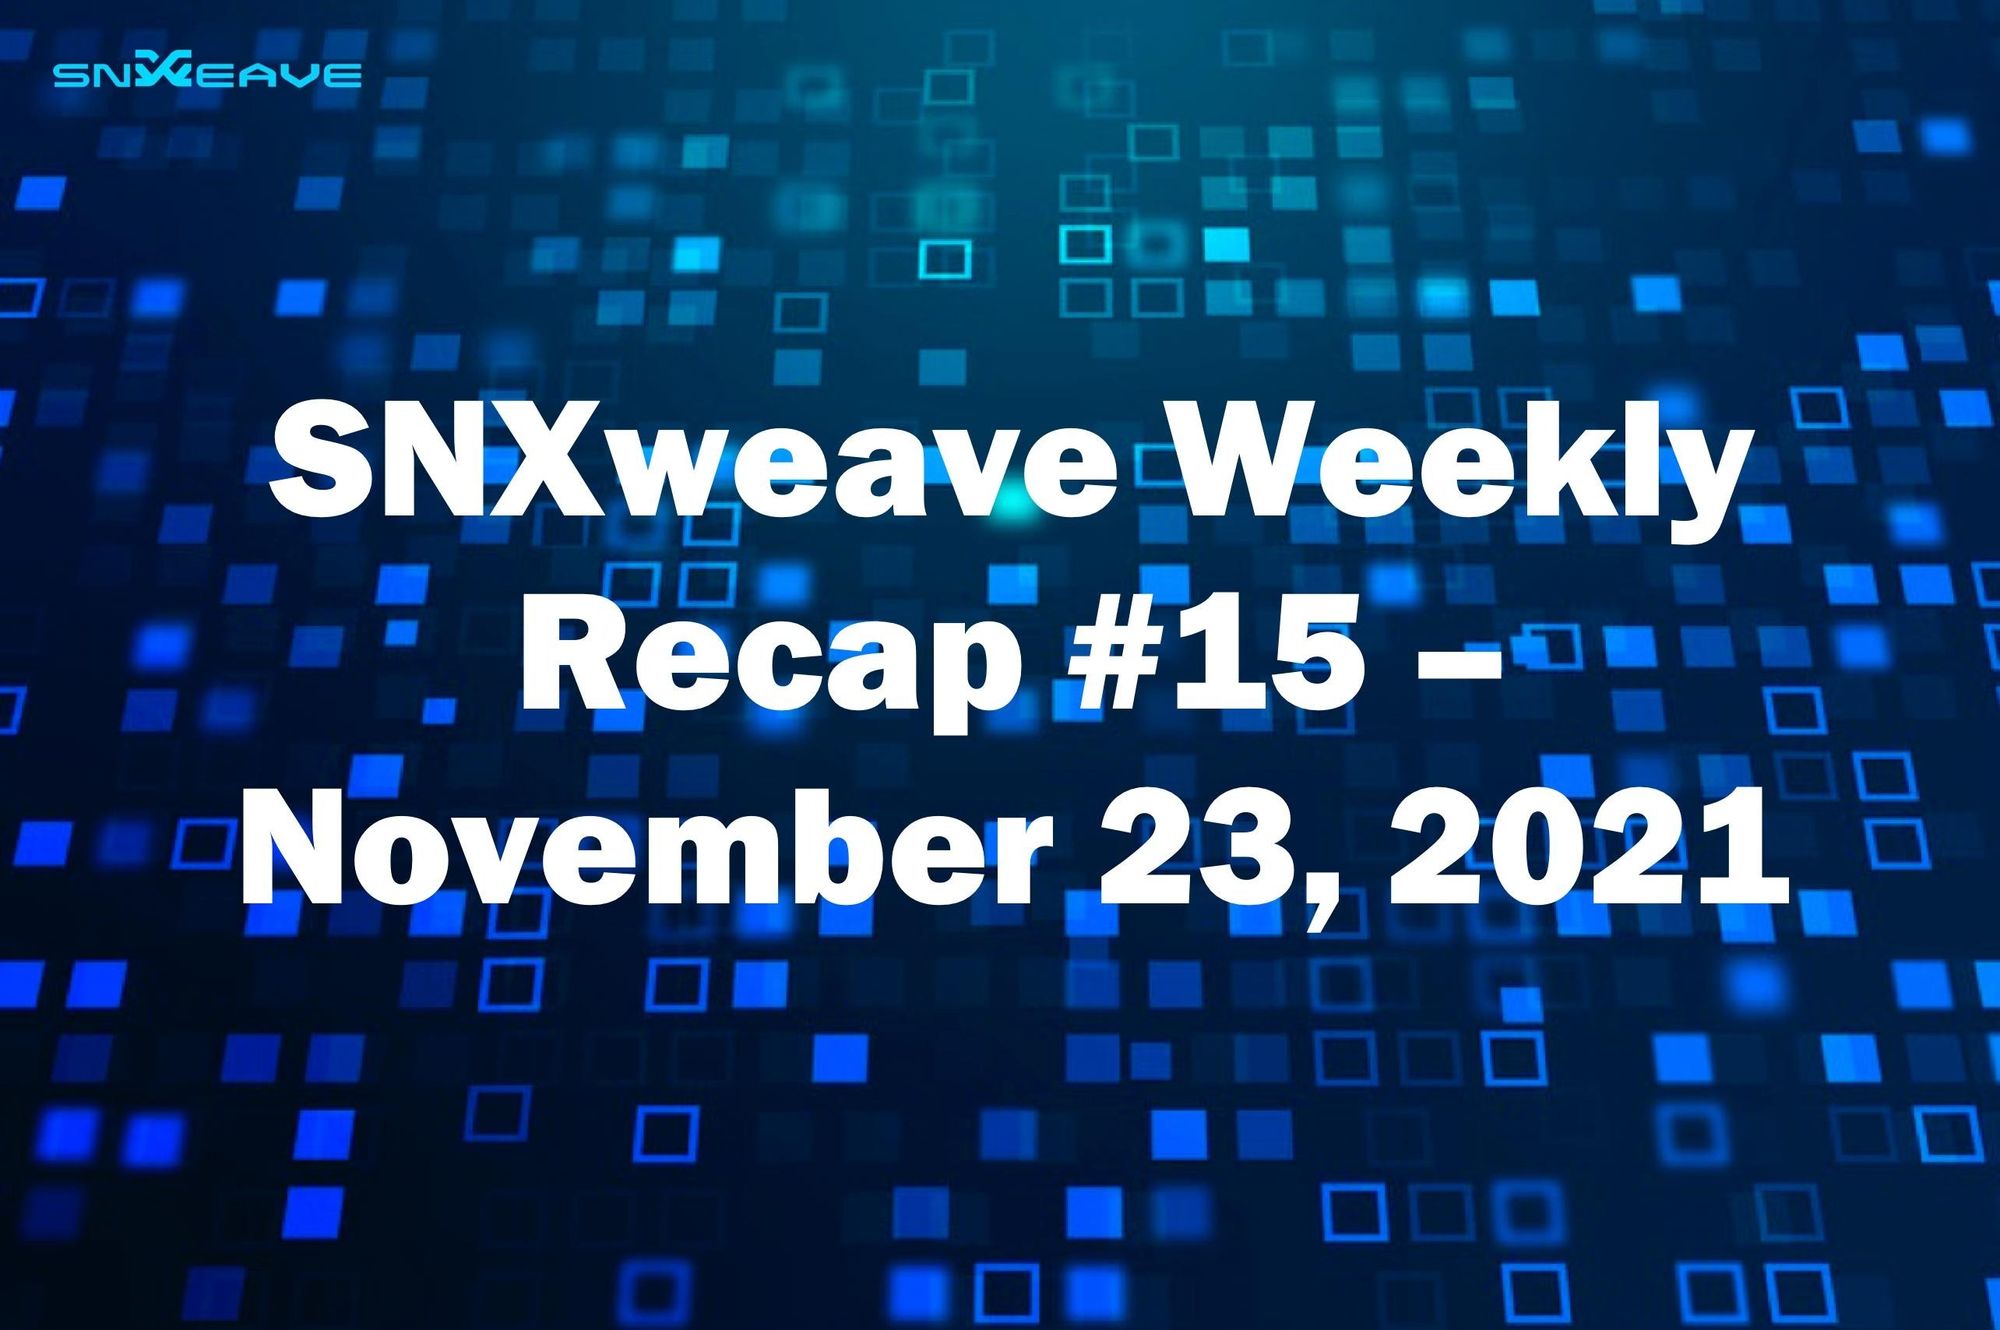 SNXweave Weekly Recap 15